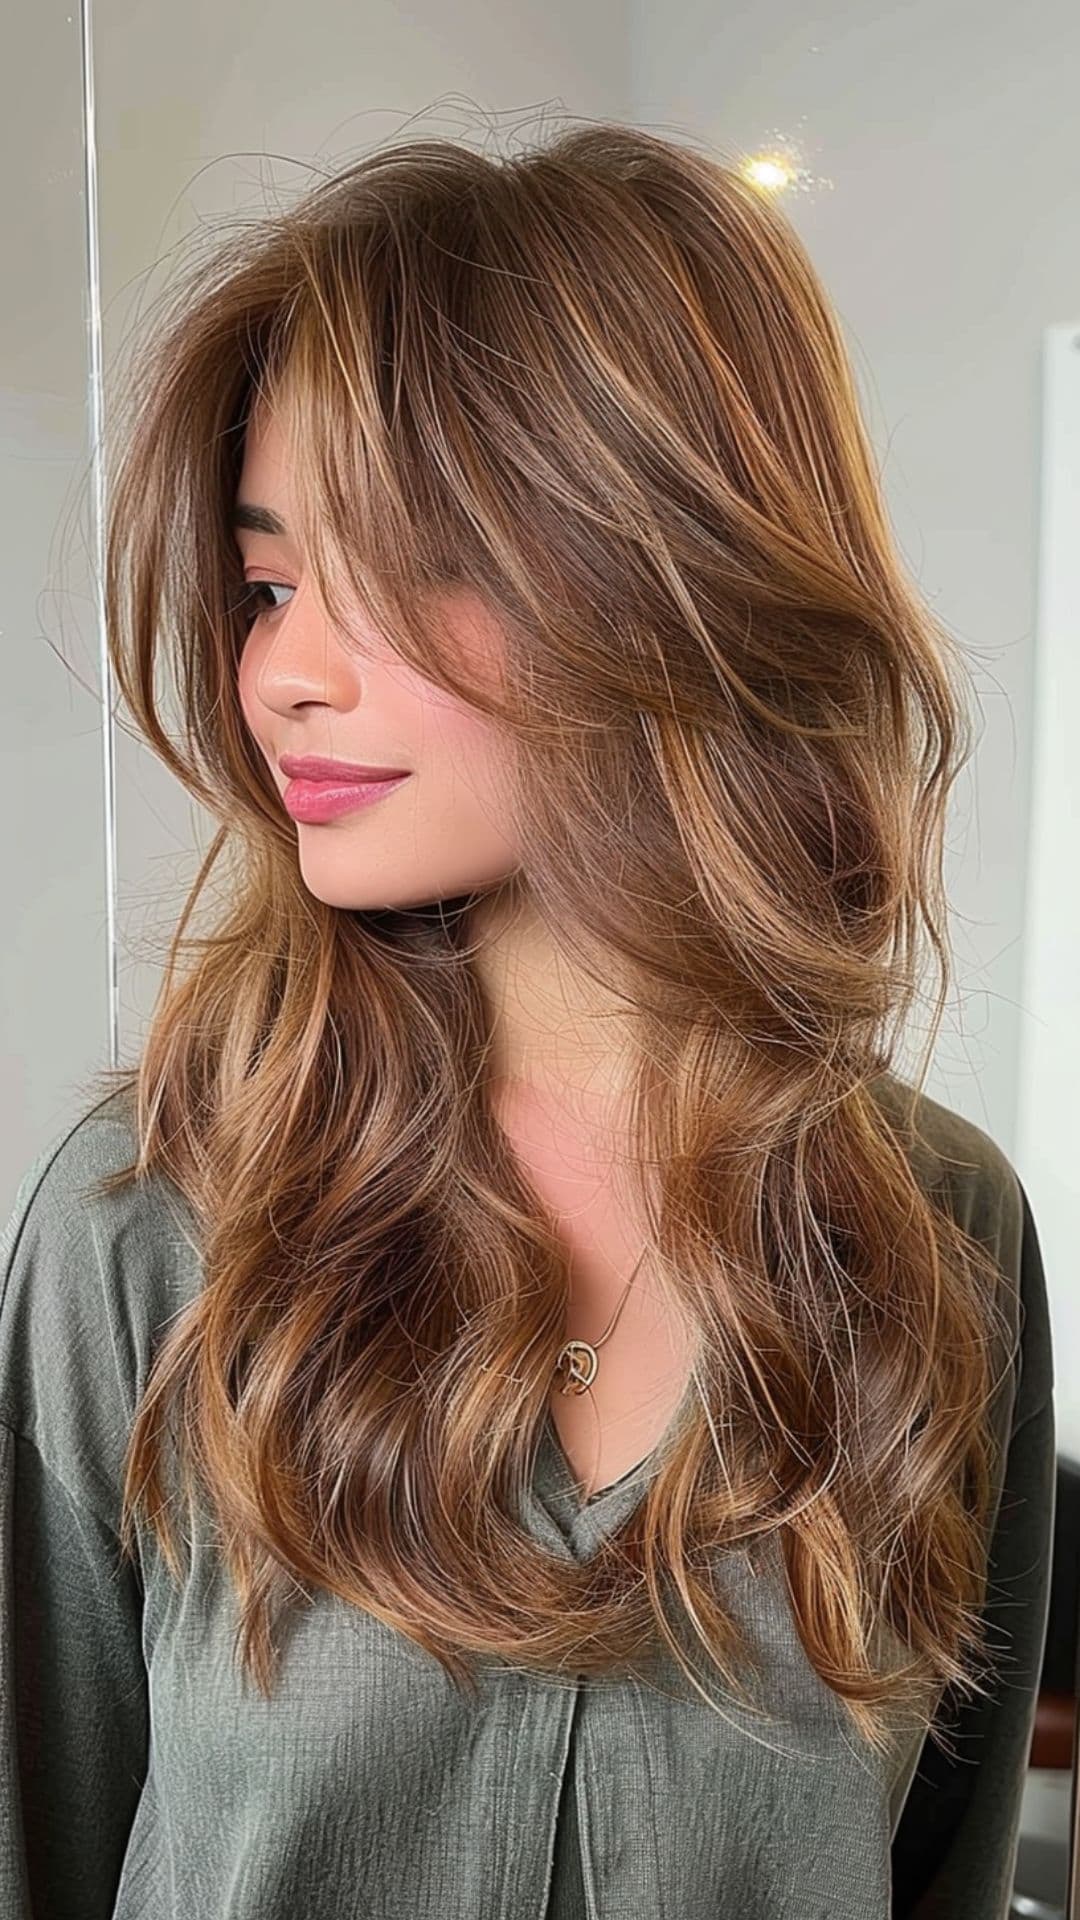 A woman modelling a caramel macchiato hair color.